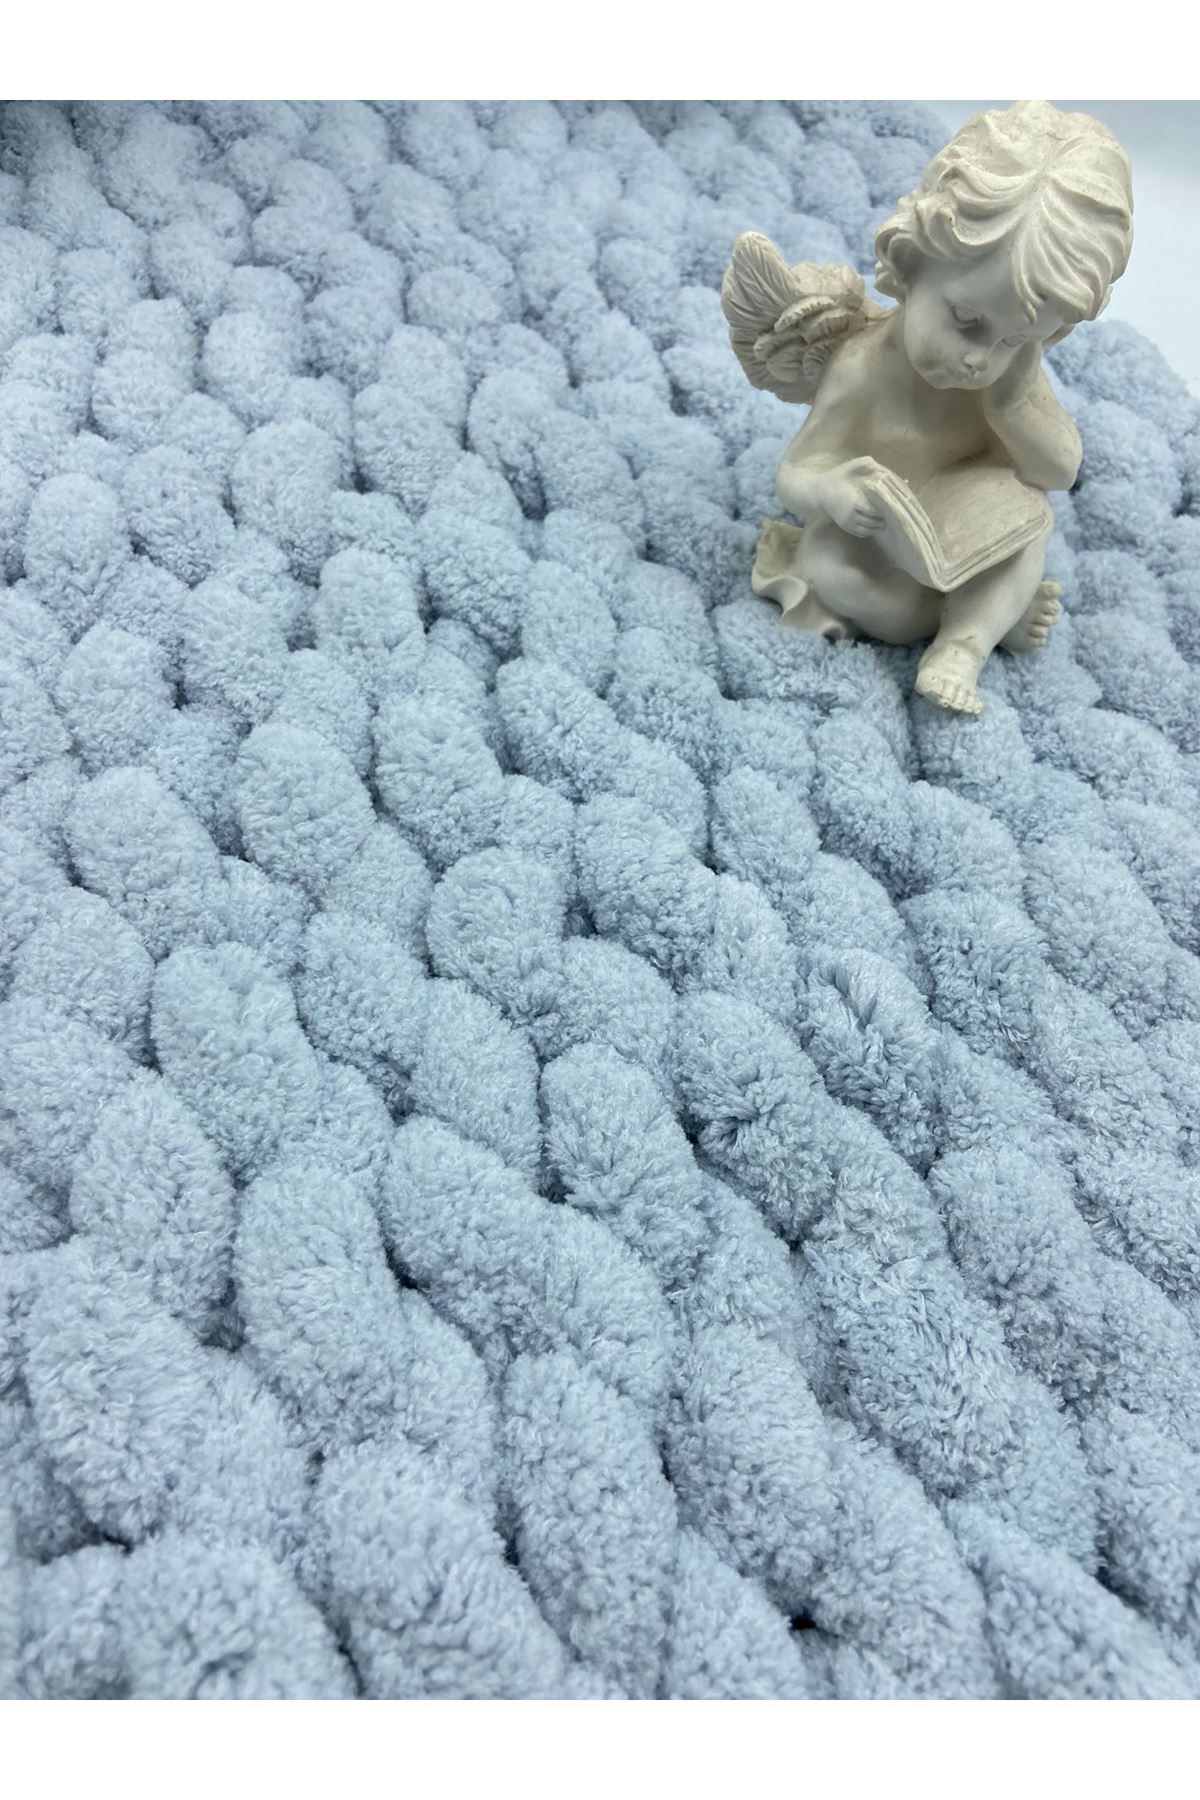 Lady Yarn Chunky Blanket 159 Turkuaz Mavi